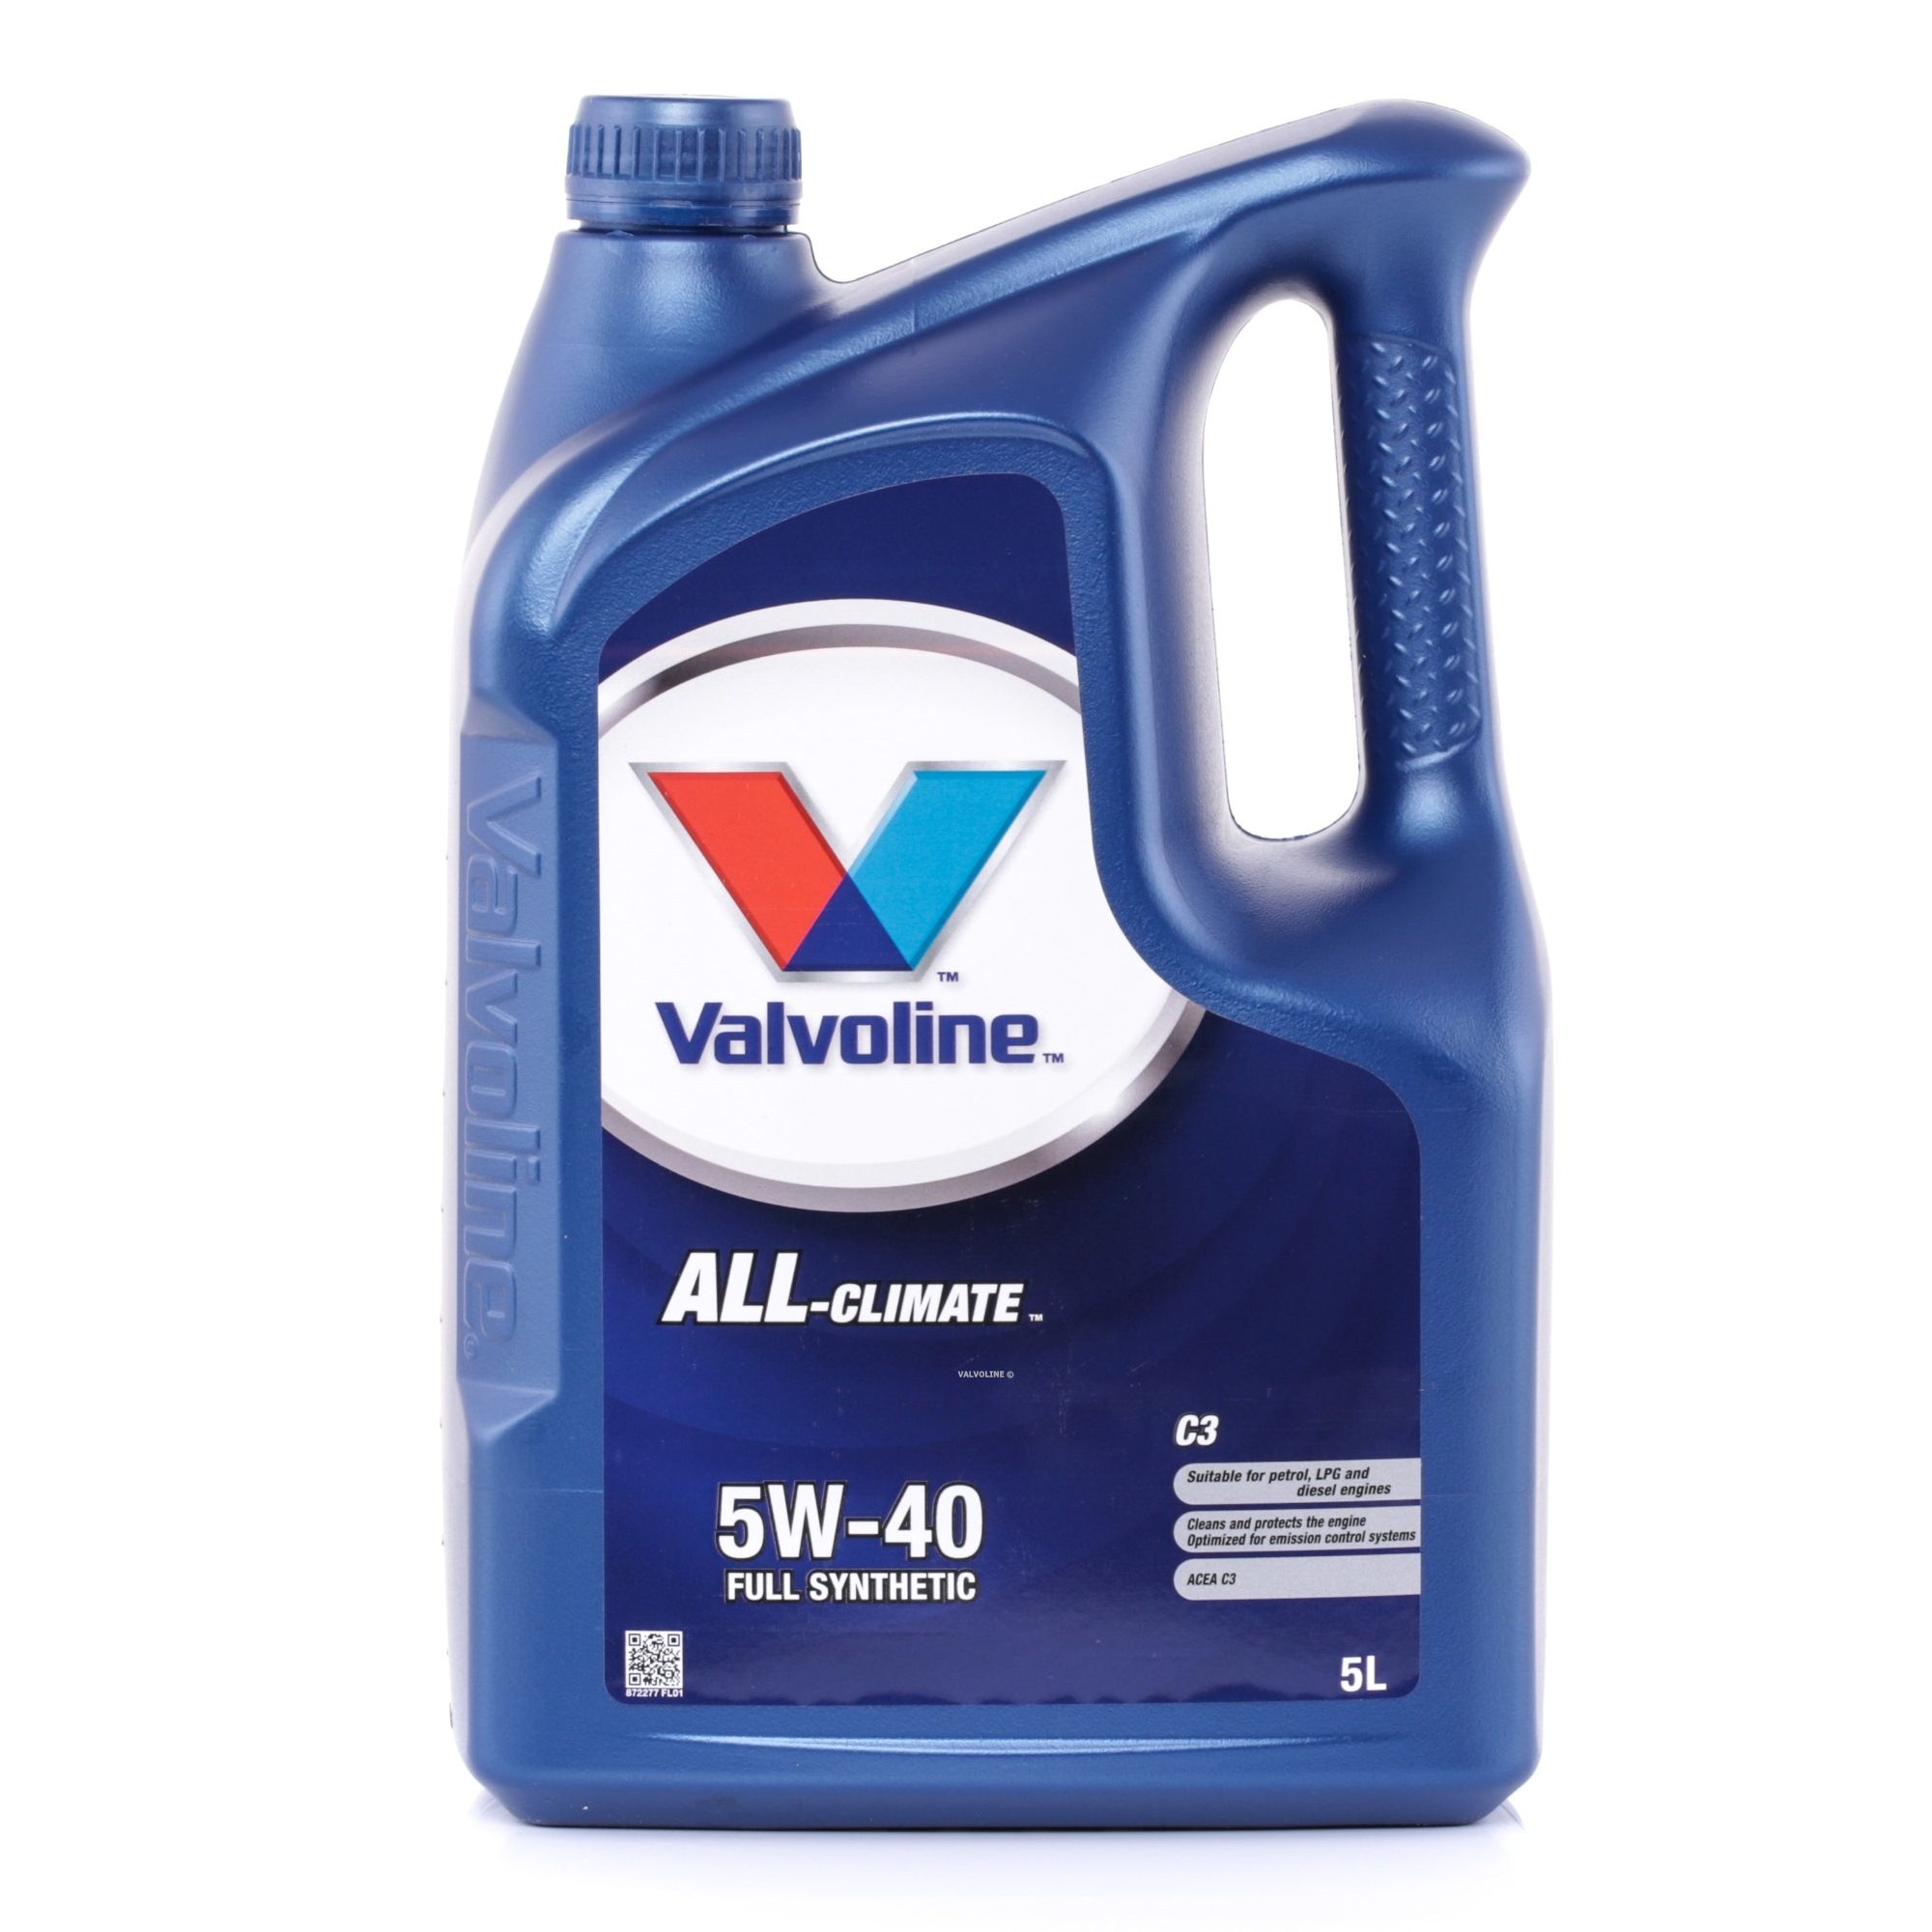 872277 Valvoline All-Climate, C3 5W-40, 5l, Synthetiköl Motoröl 872277 günstig kaufen